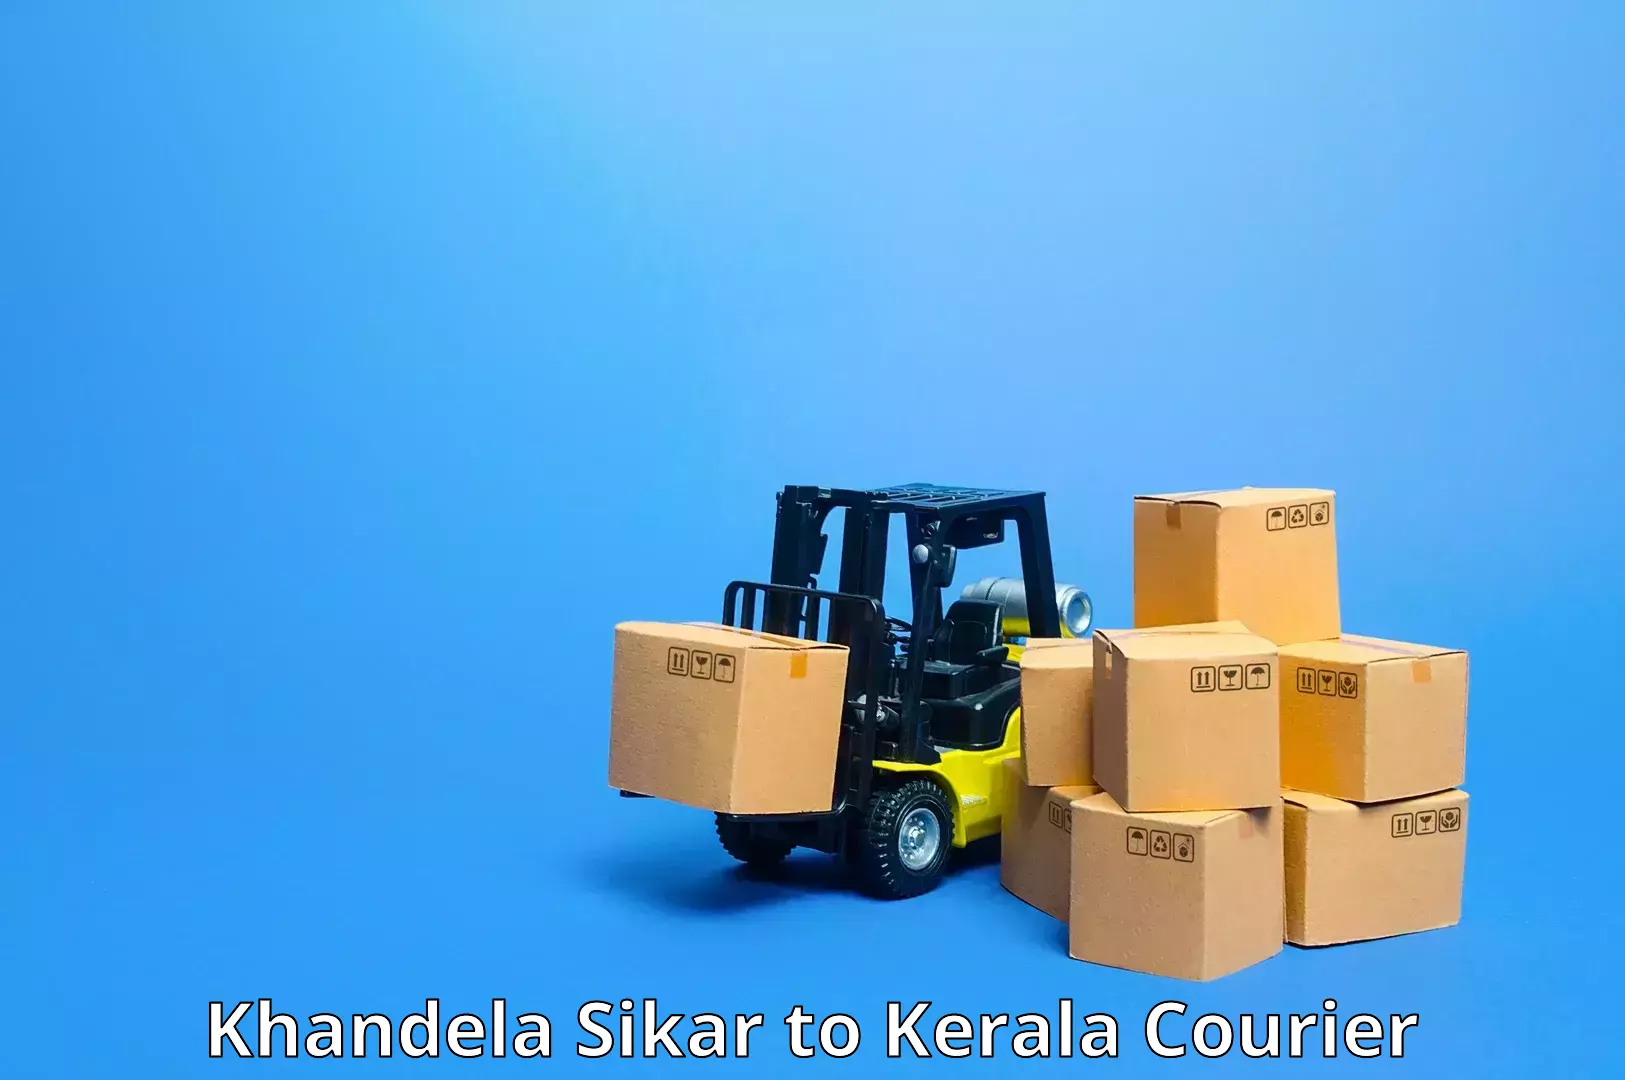 Courier membership Khandela Sikar to Trivandrum